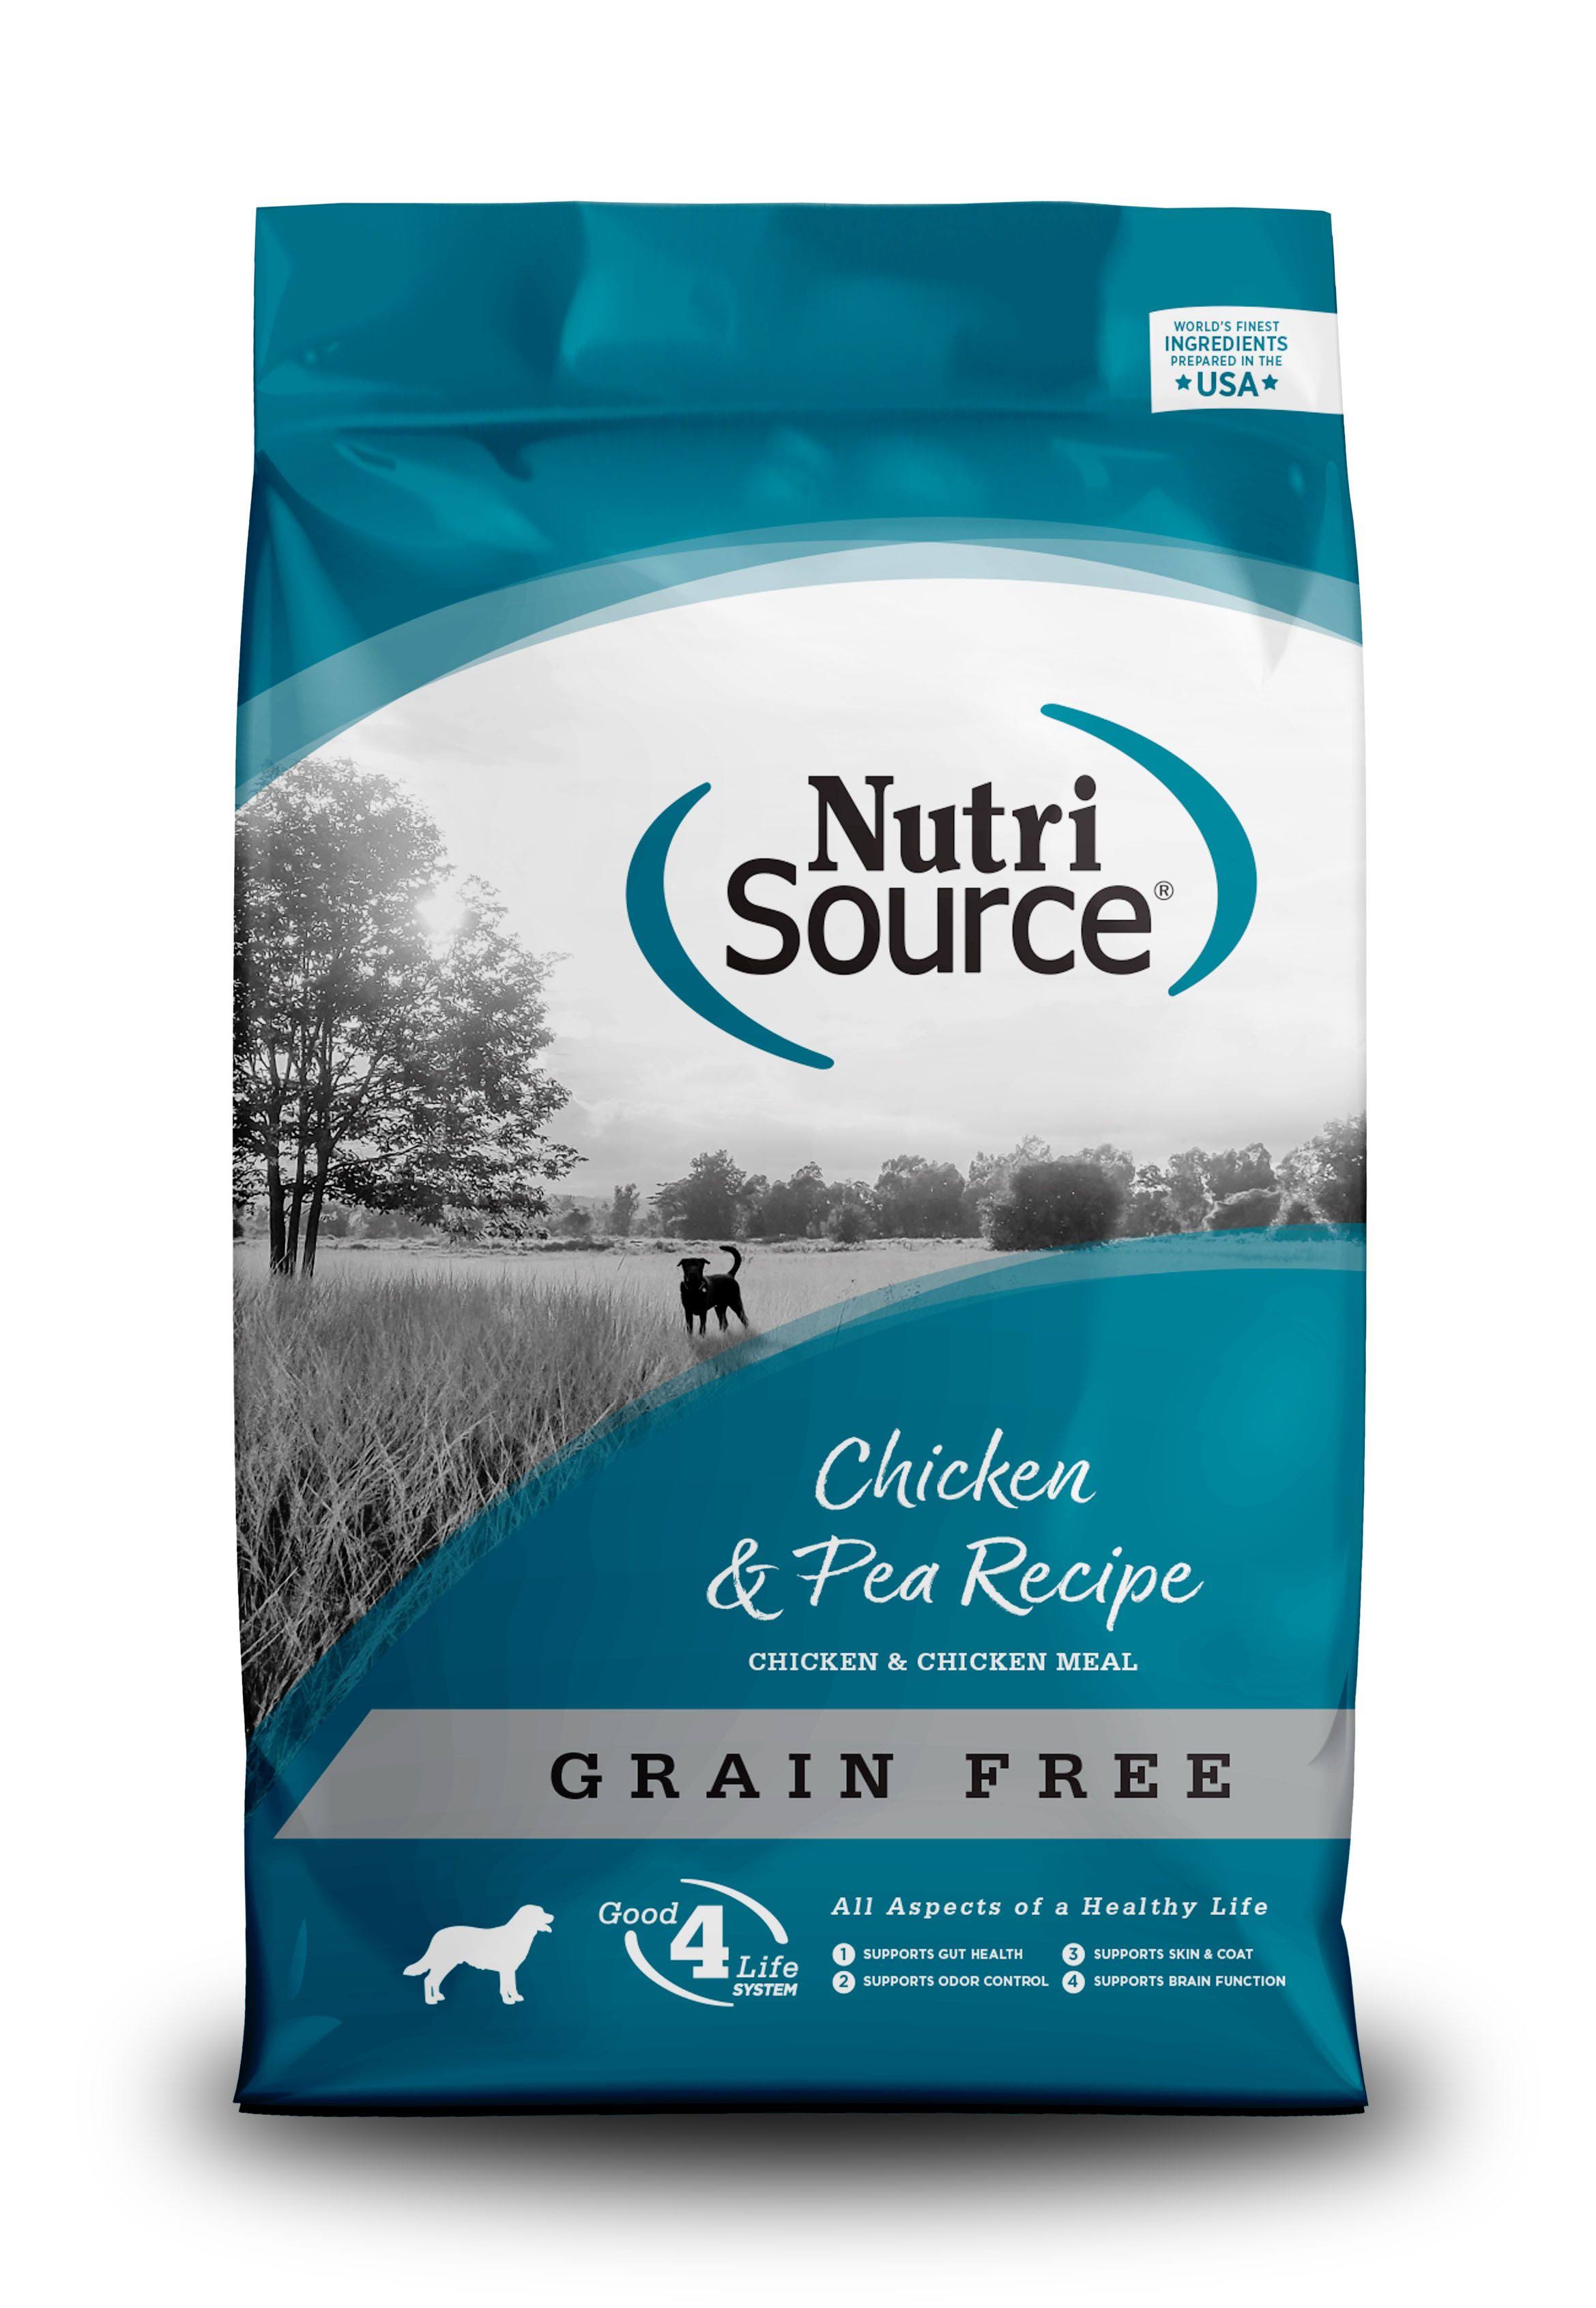 NutriSource Grain Free Dog Food - Chicken